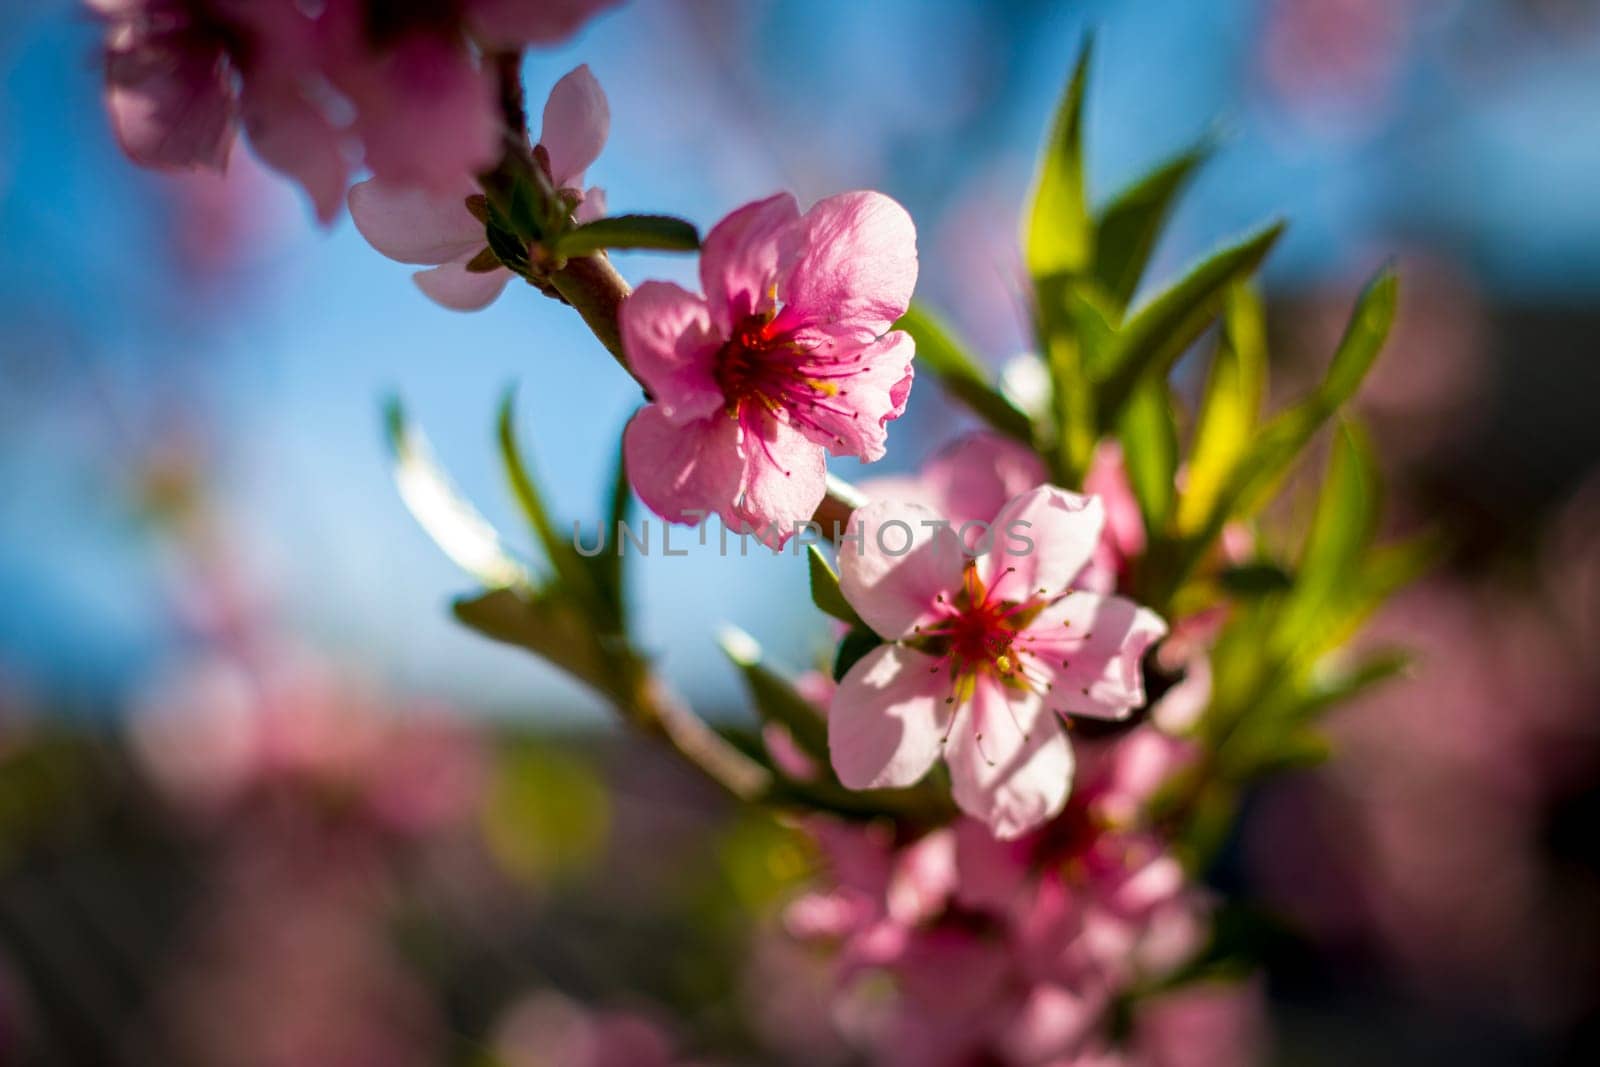 Spring nectarine peach blossom flowers on sunny day. Agriculture beautiful season farming springtime landscape